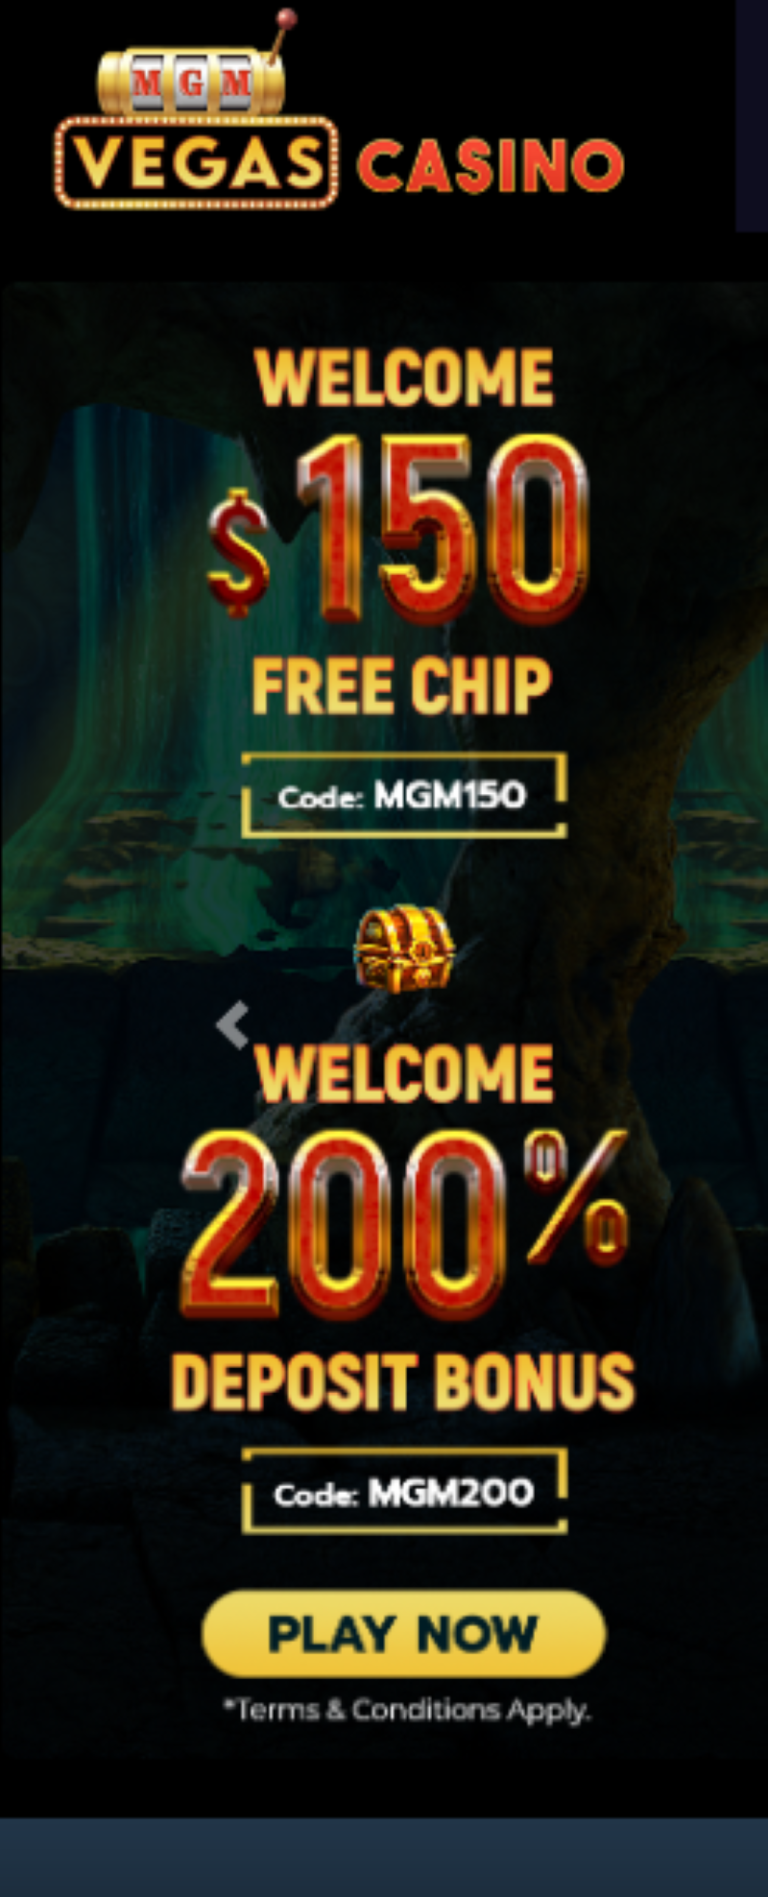 MGM Vegas Casino: $150 Free Chip NO DEPOSIT BONUS code MGM150 + 200% Match Bonus Code MGM200